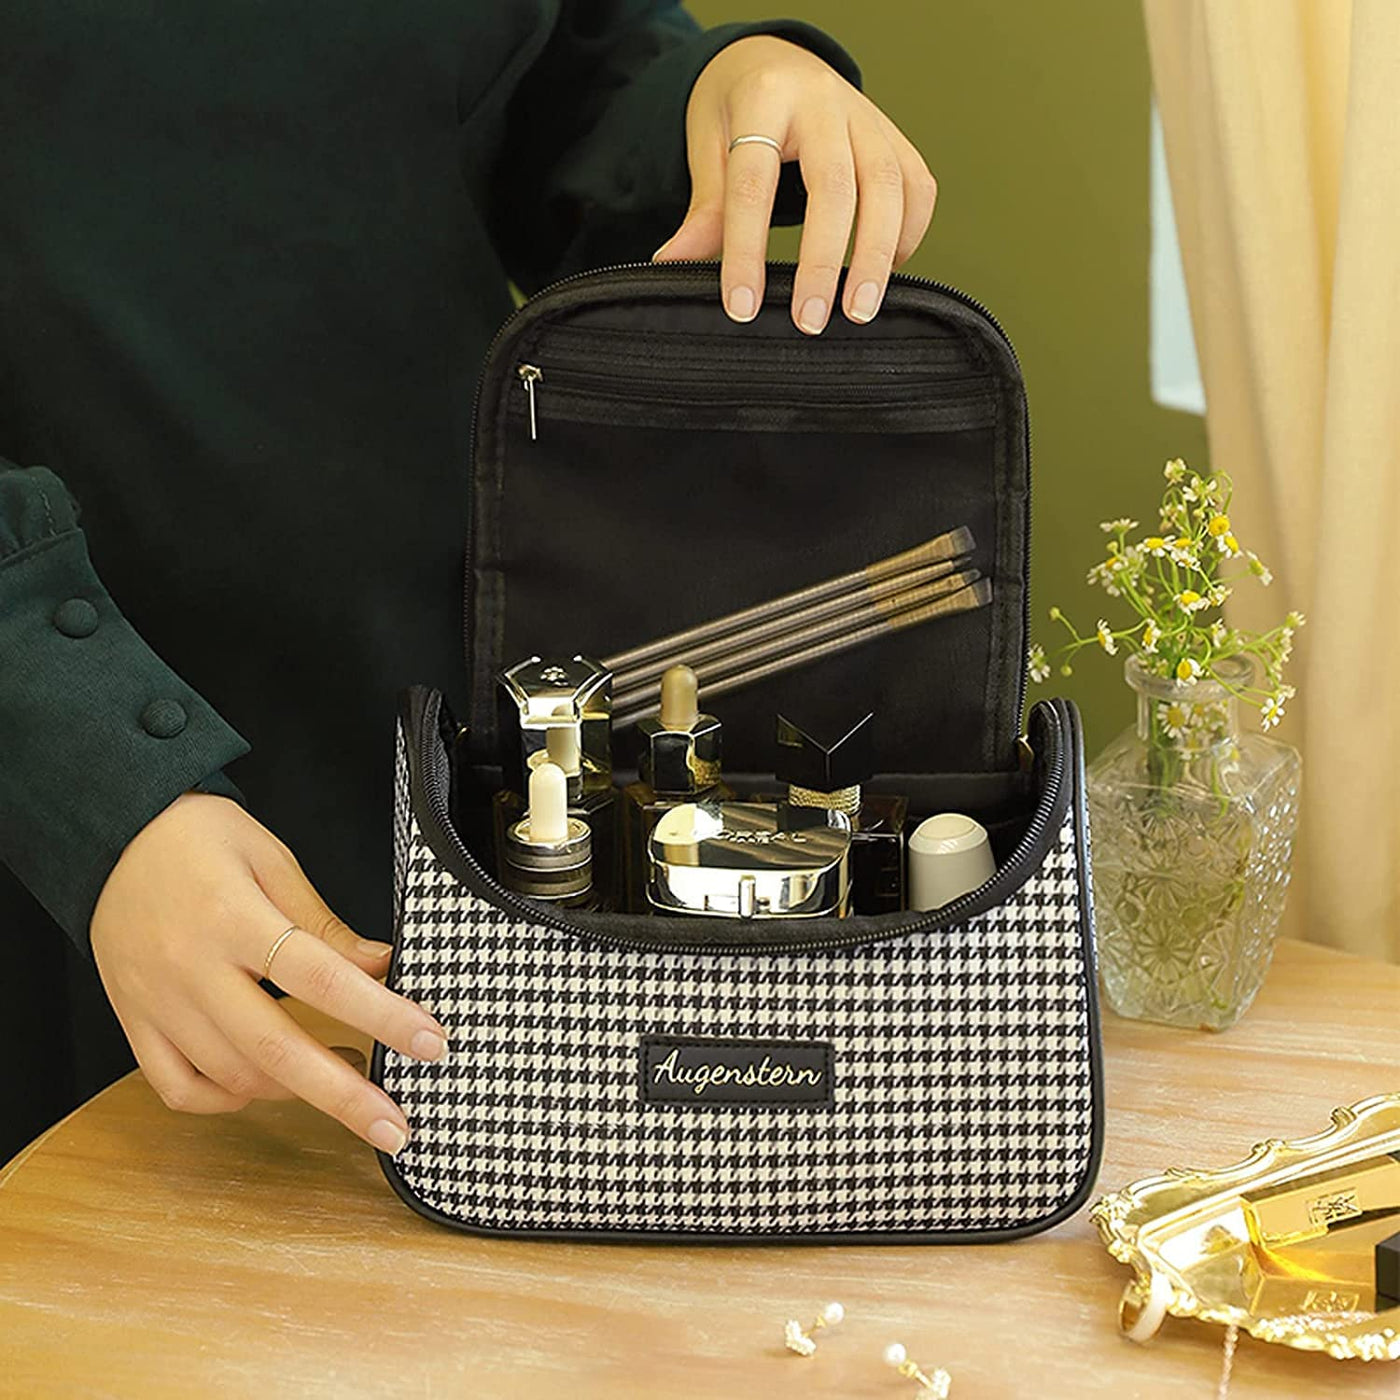 Multifunction Portable & Waterproof Travel Cosmetic Organizer, Great Gift for Women & Girls